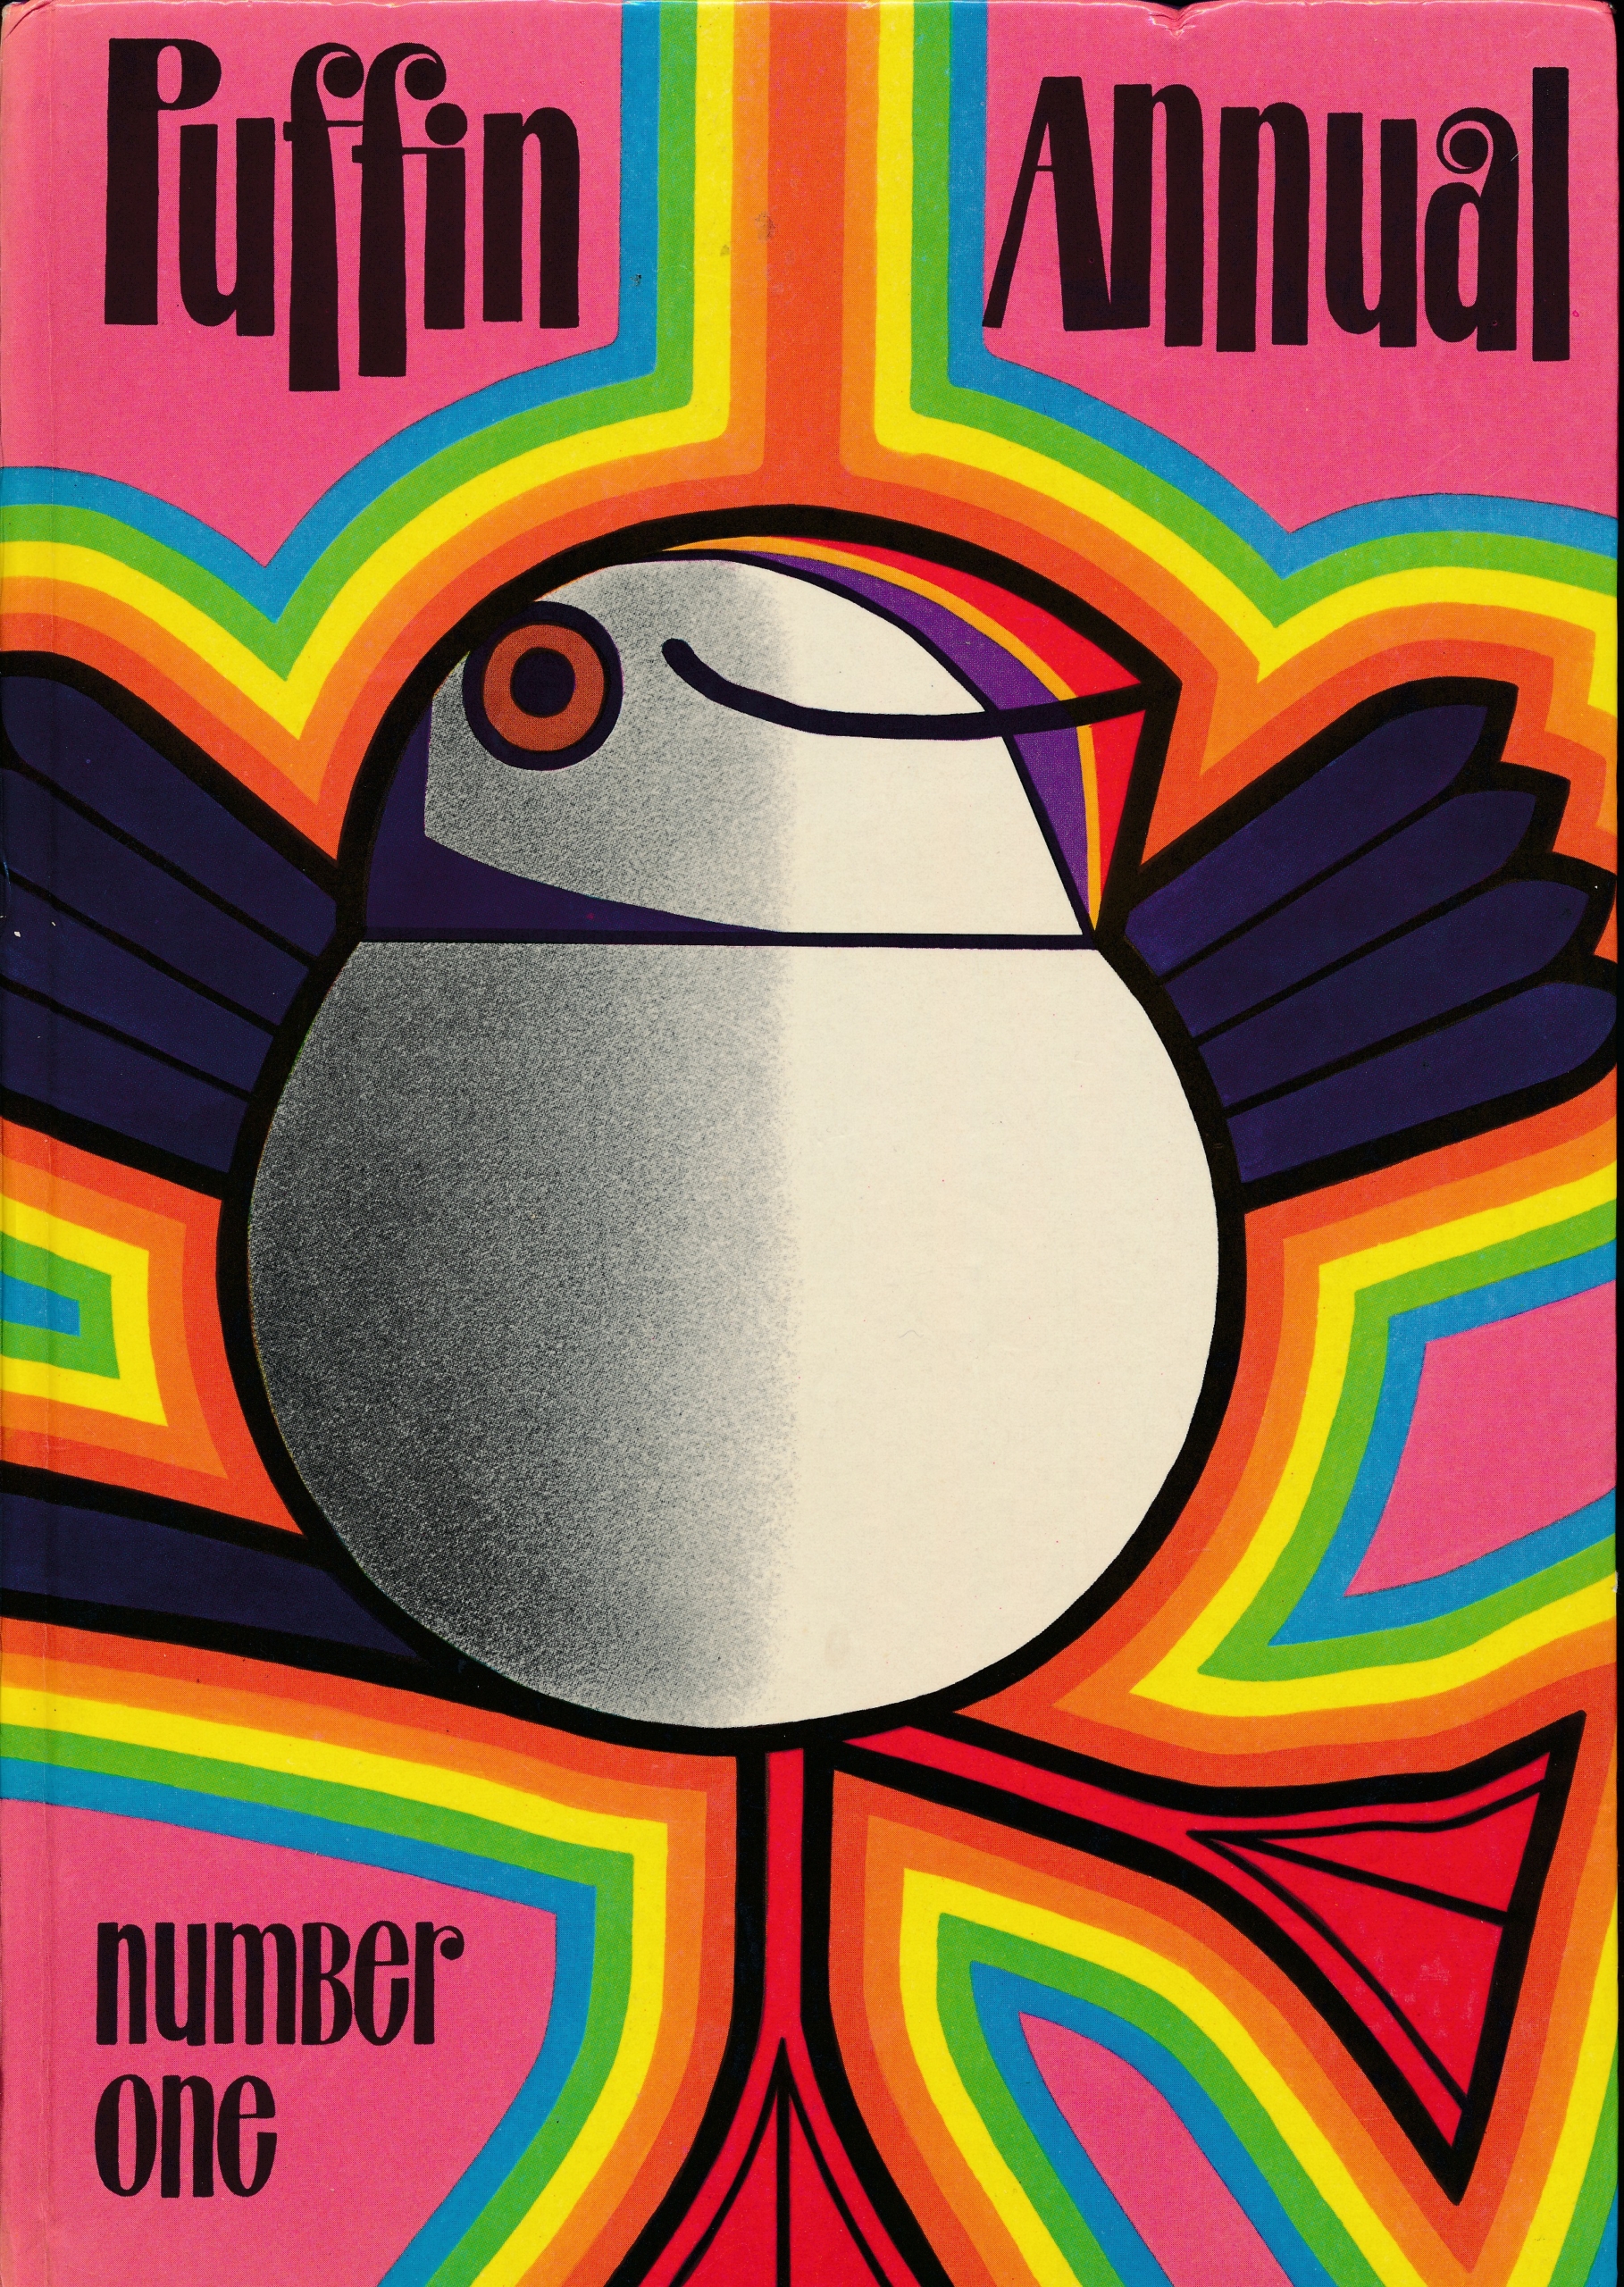 puffin annual cover